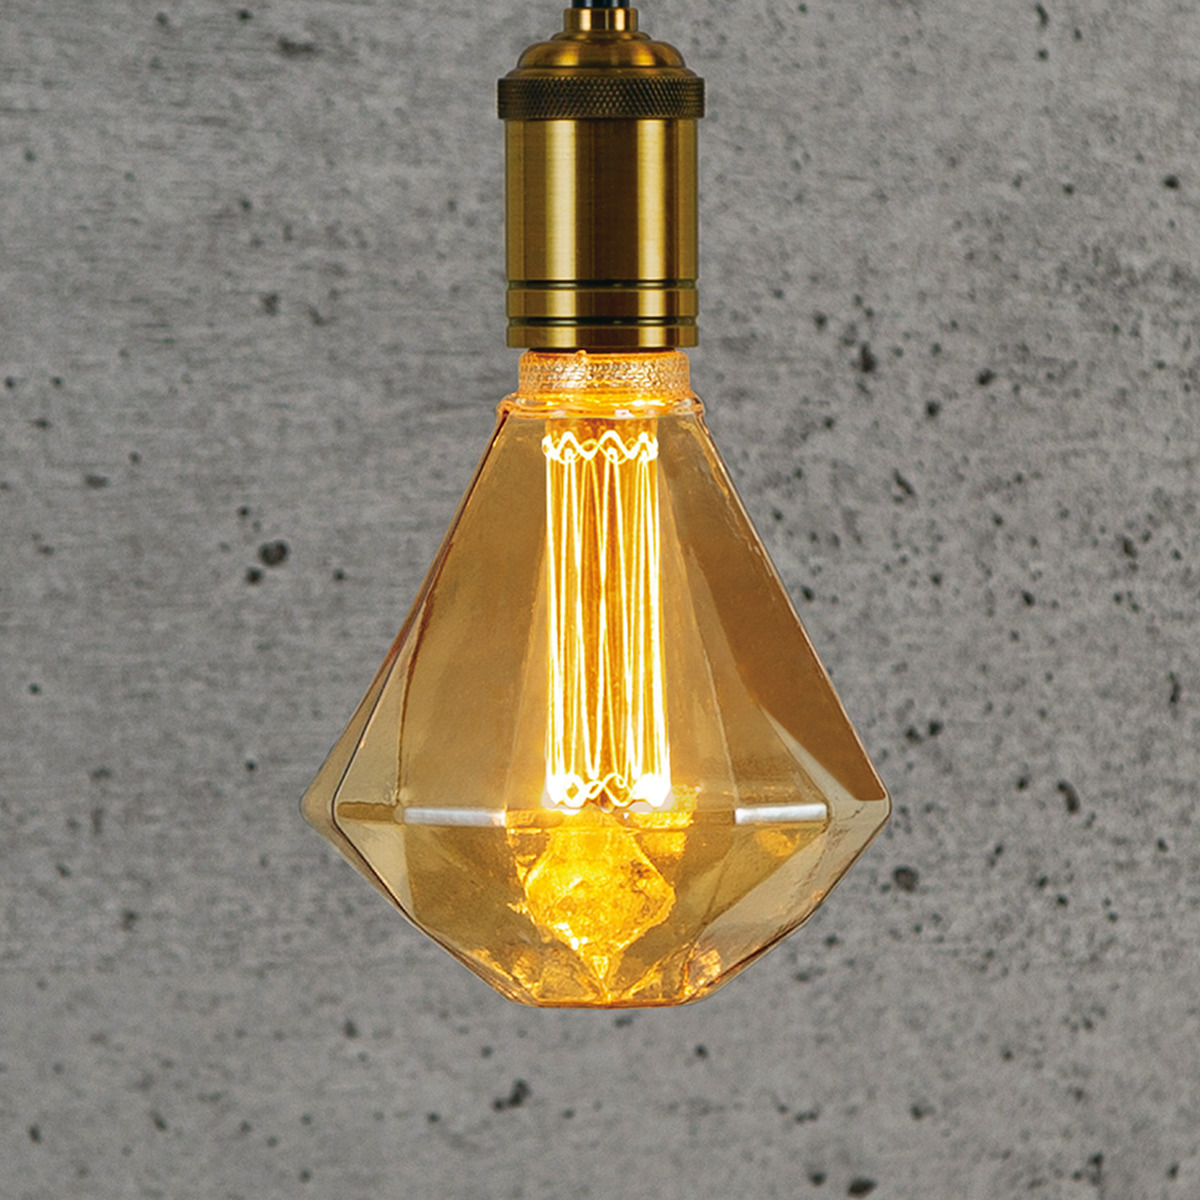 LED電球型アンティーク調ライト